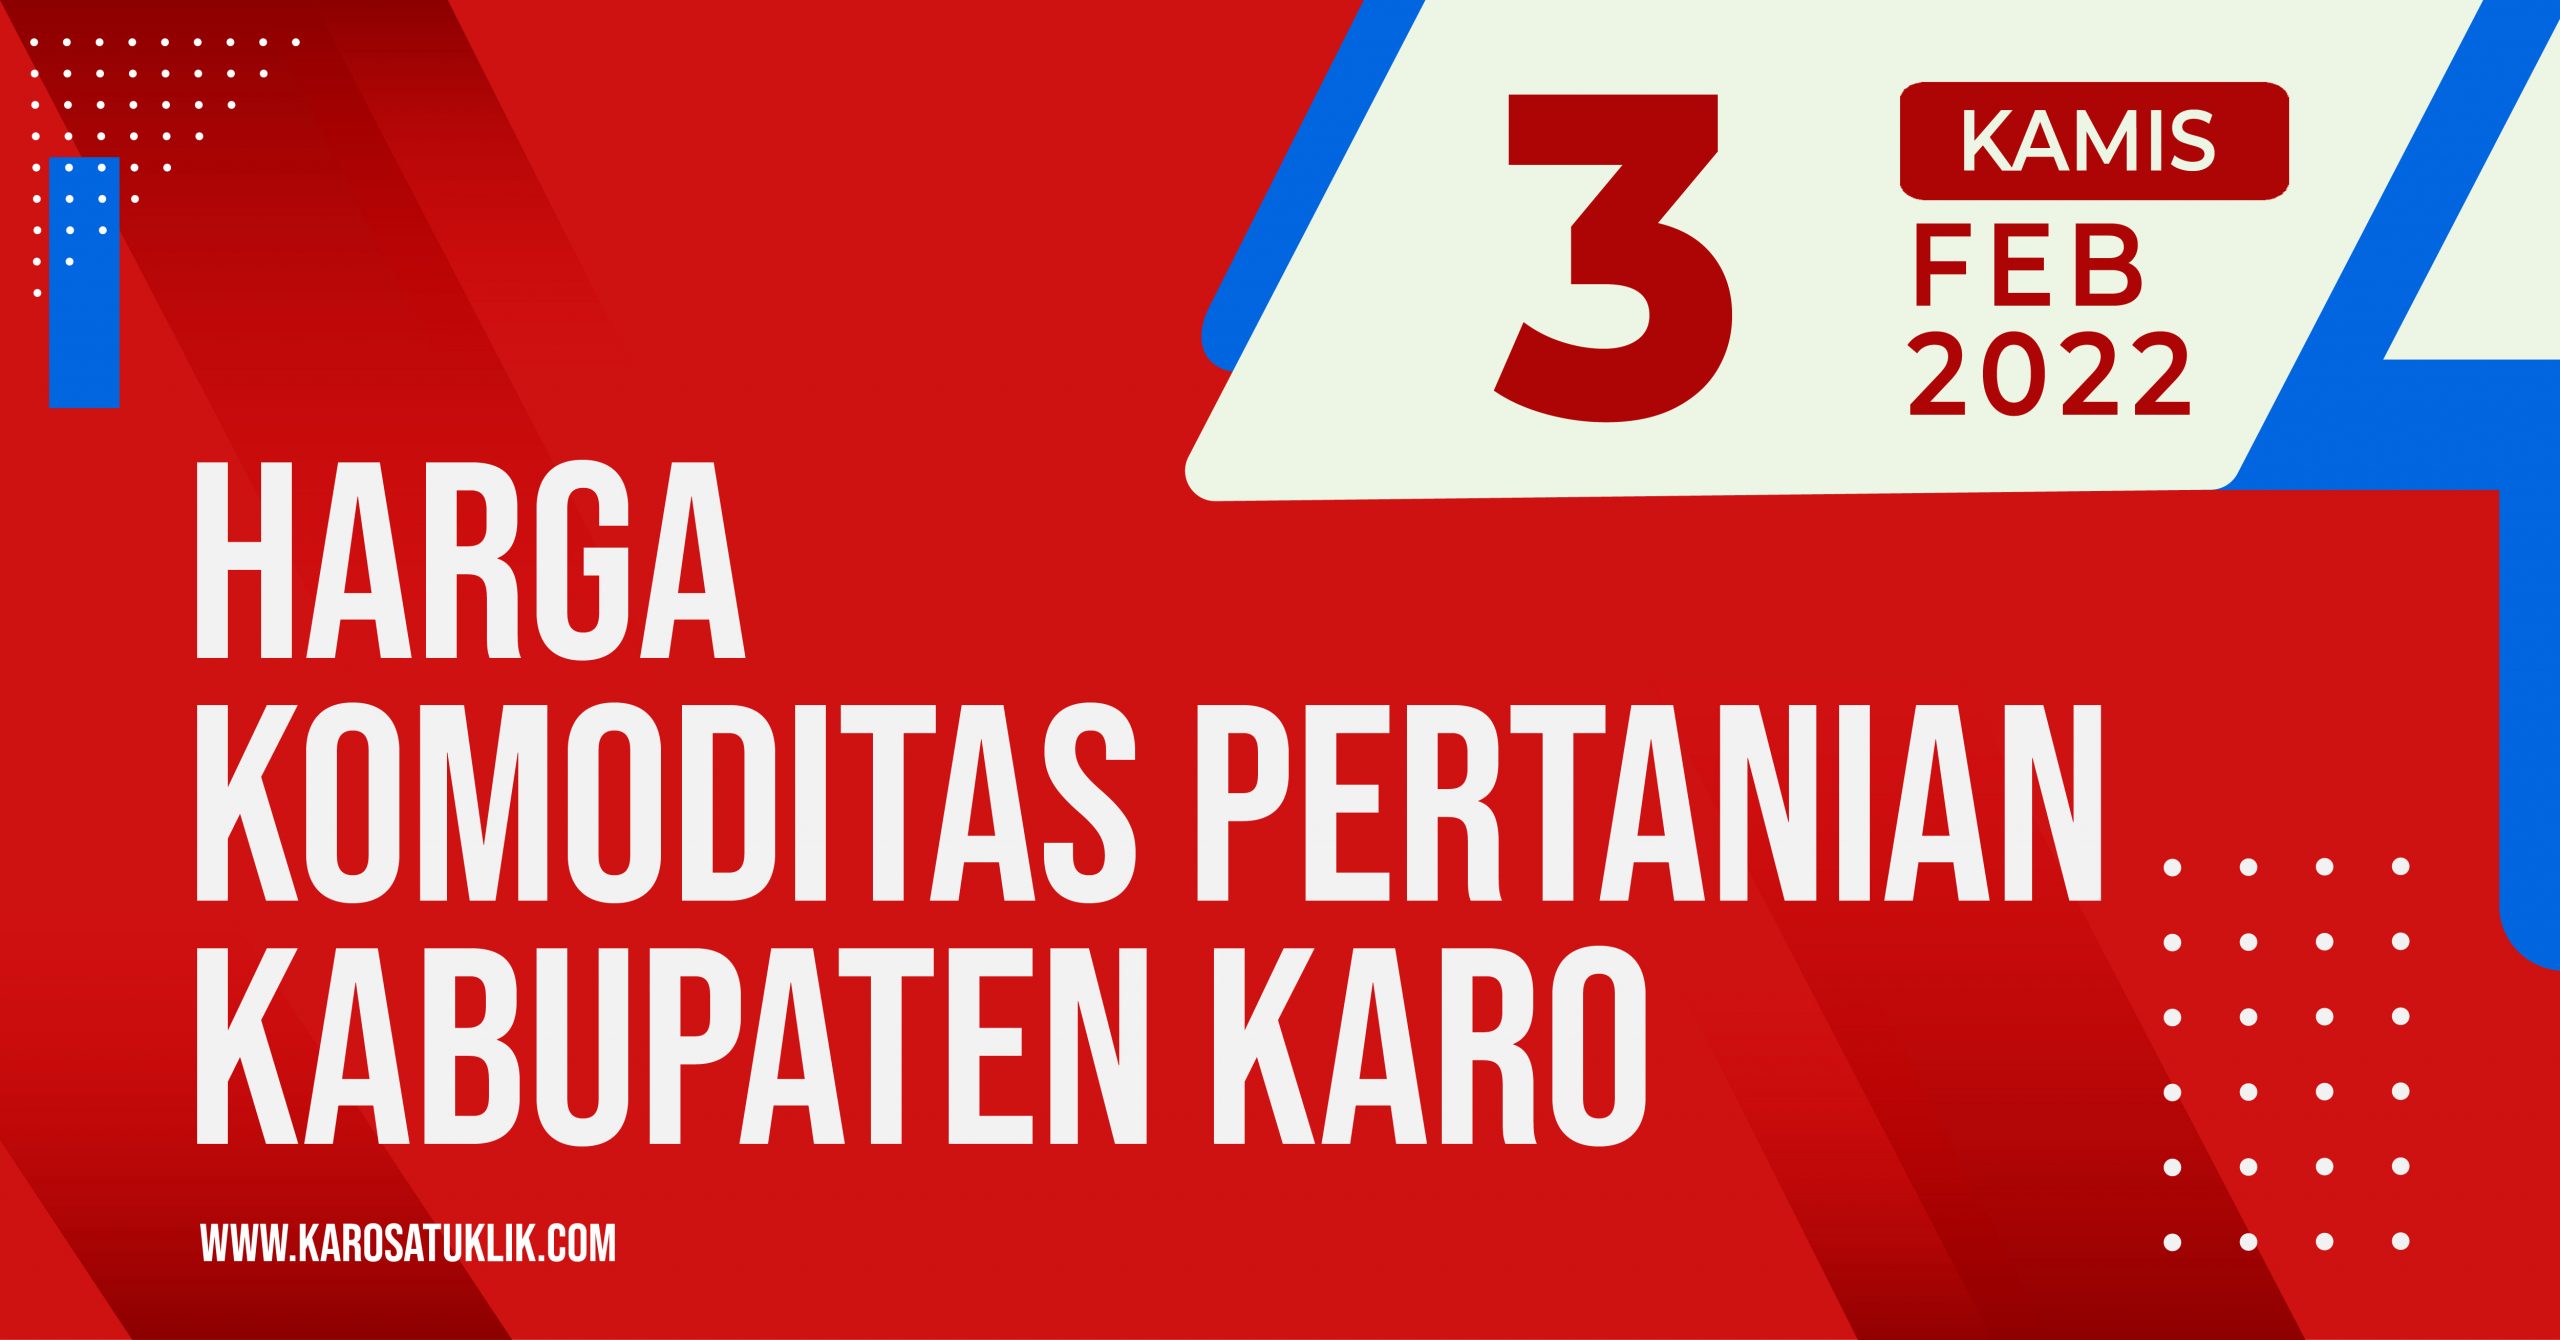 Daftar Harga Komoditas Pertanian Kabupaten Karo, 3 Februari 2022